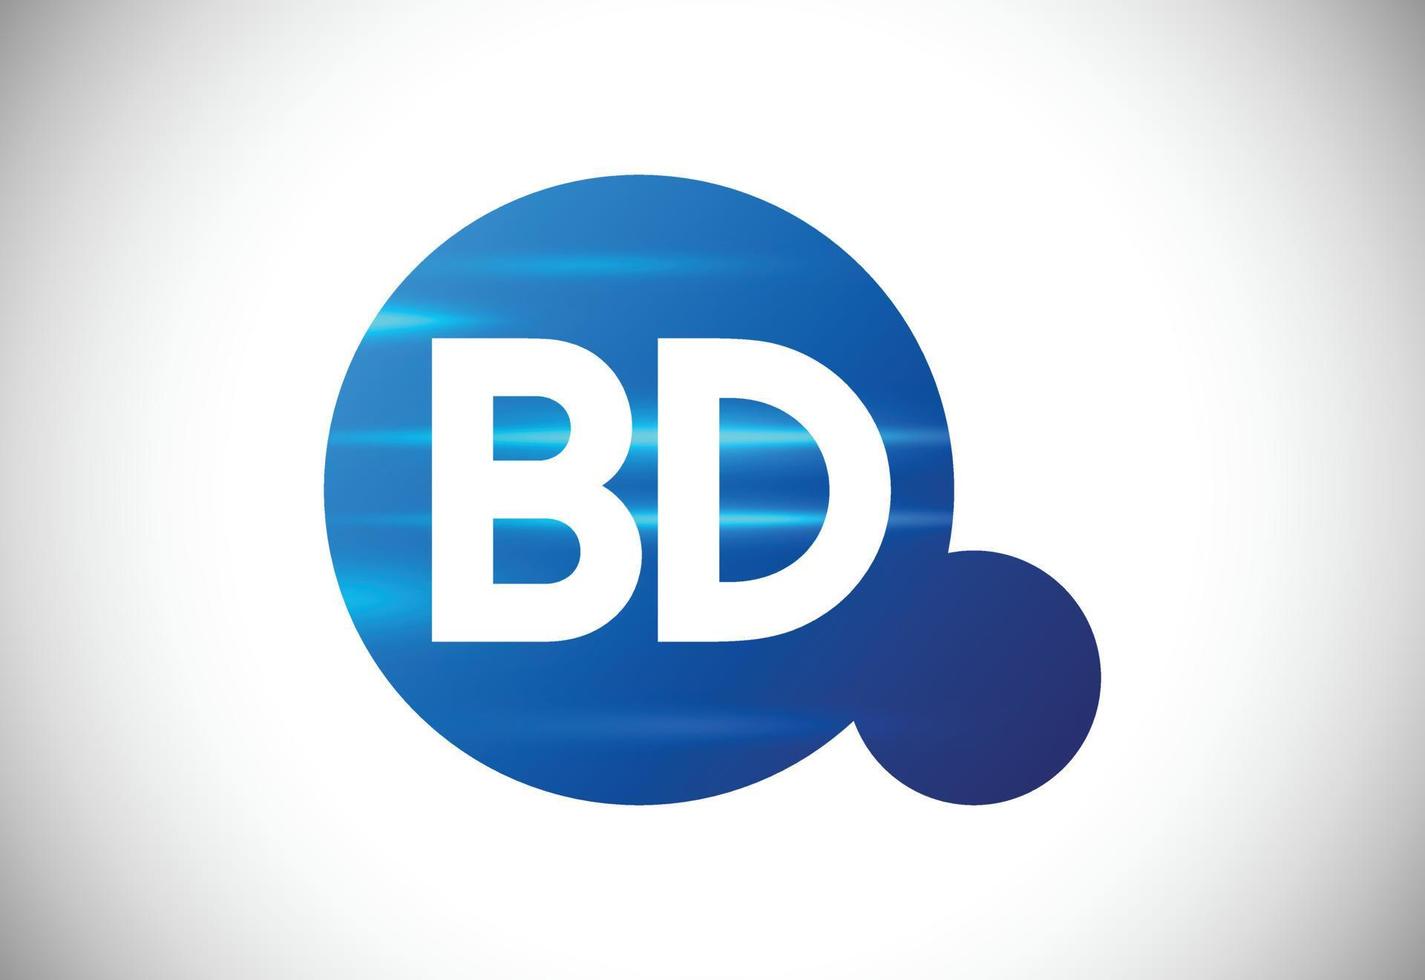 vetor de design de logotipo bd letra inicial. símbolo gráfico do alfabeto para identidade de negócios corporativos